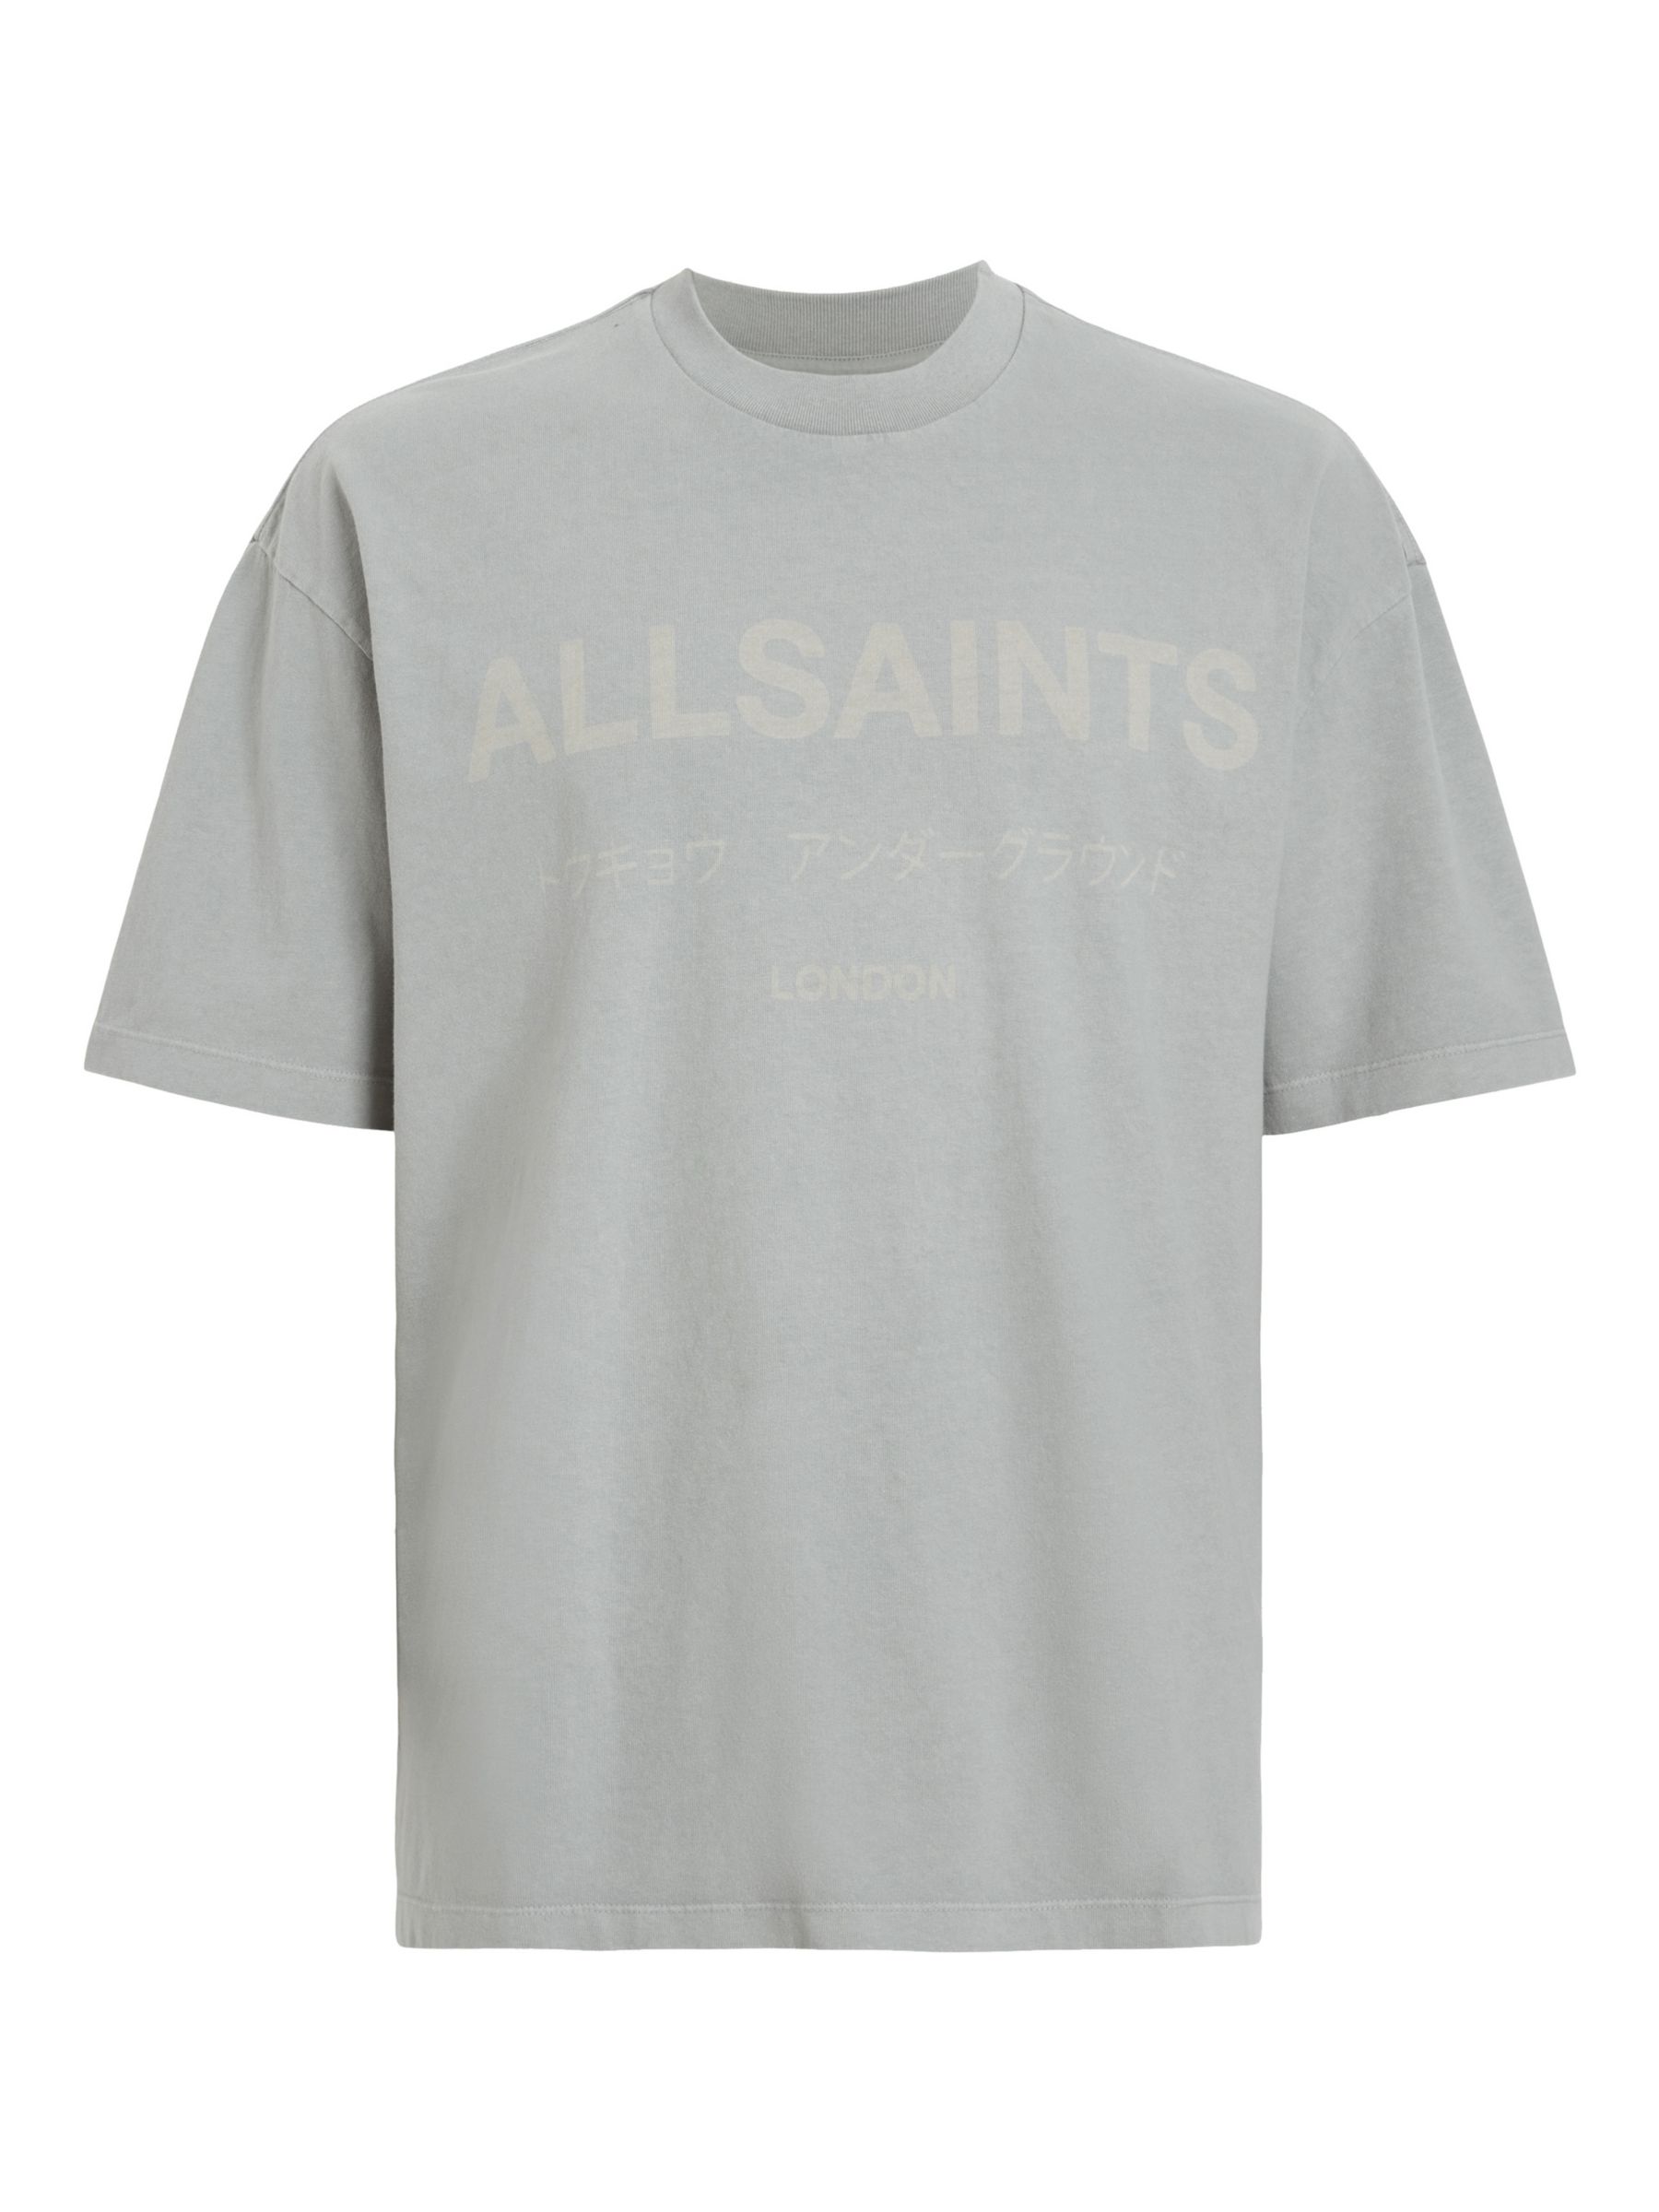 AllSaints Laser Short Sleeve Crew T-Shirt, Grey, L